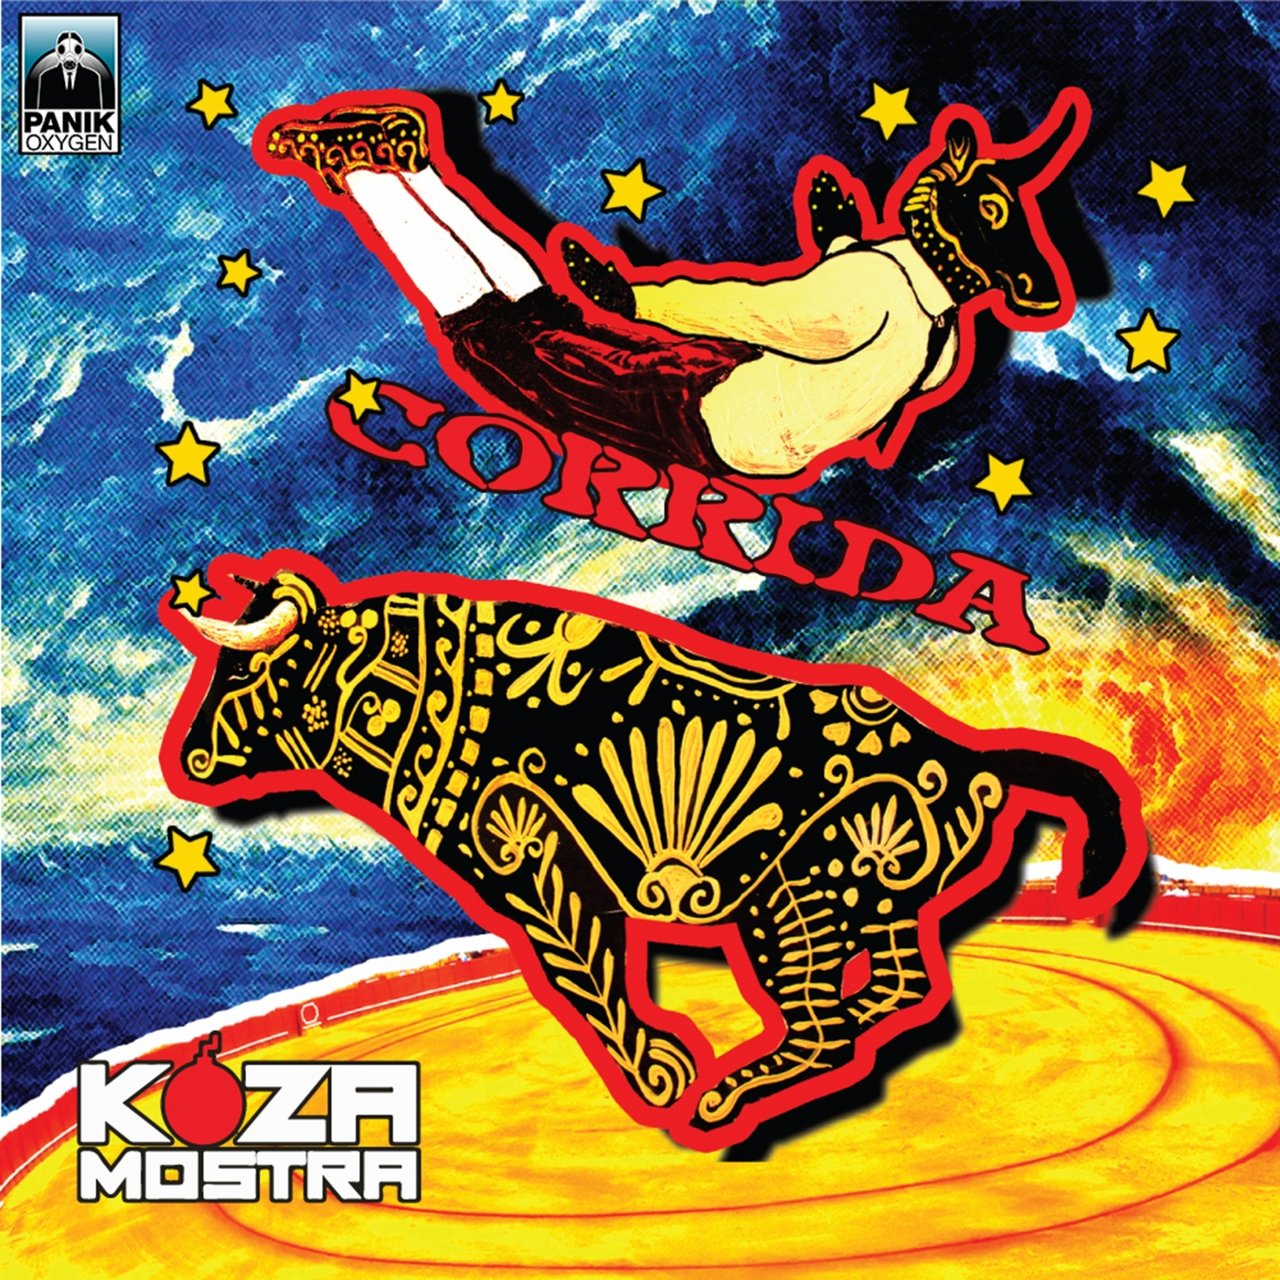 Koza Mostra Corrida cover artwork